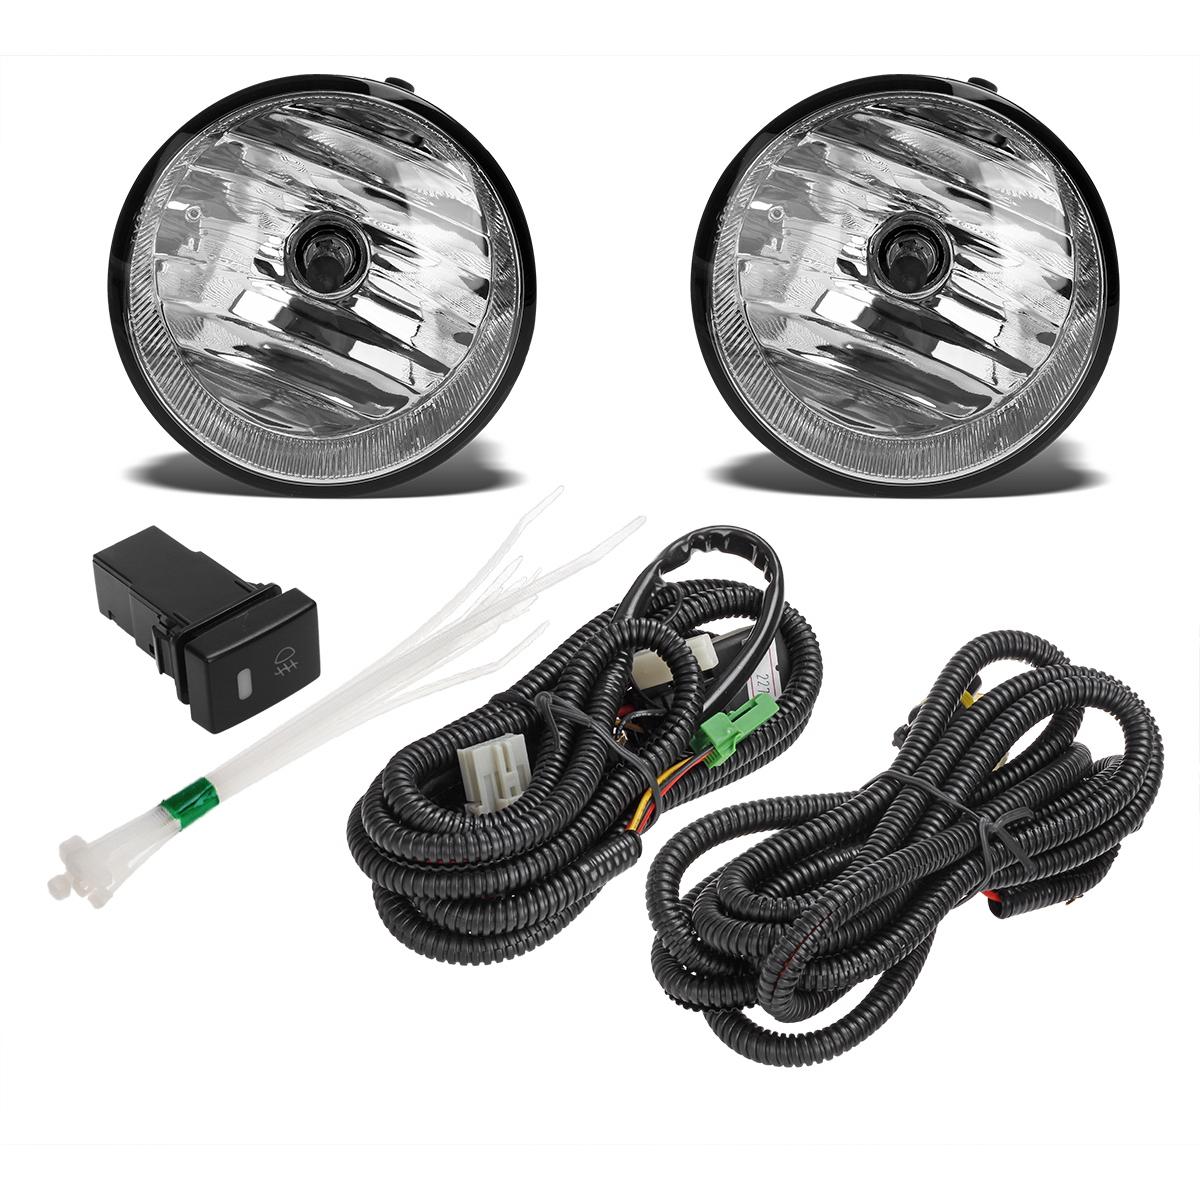 For 0511 Toyota Fog Lights Clear Lens Front Driving Lamps Kit +5050 LED eBay